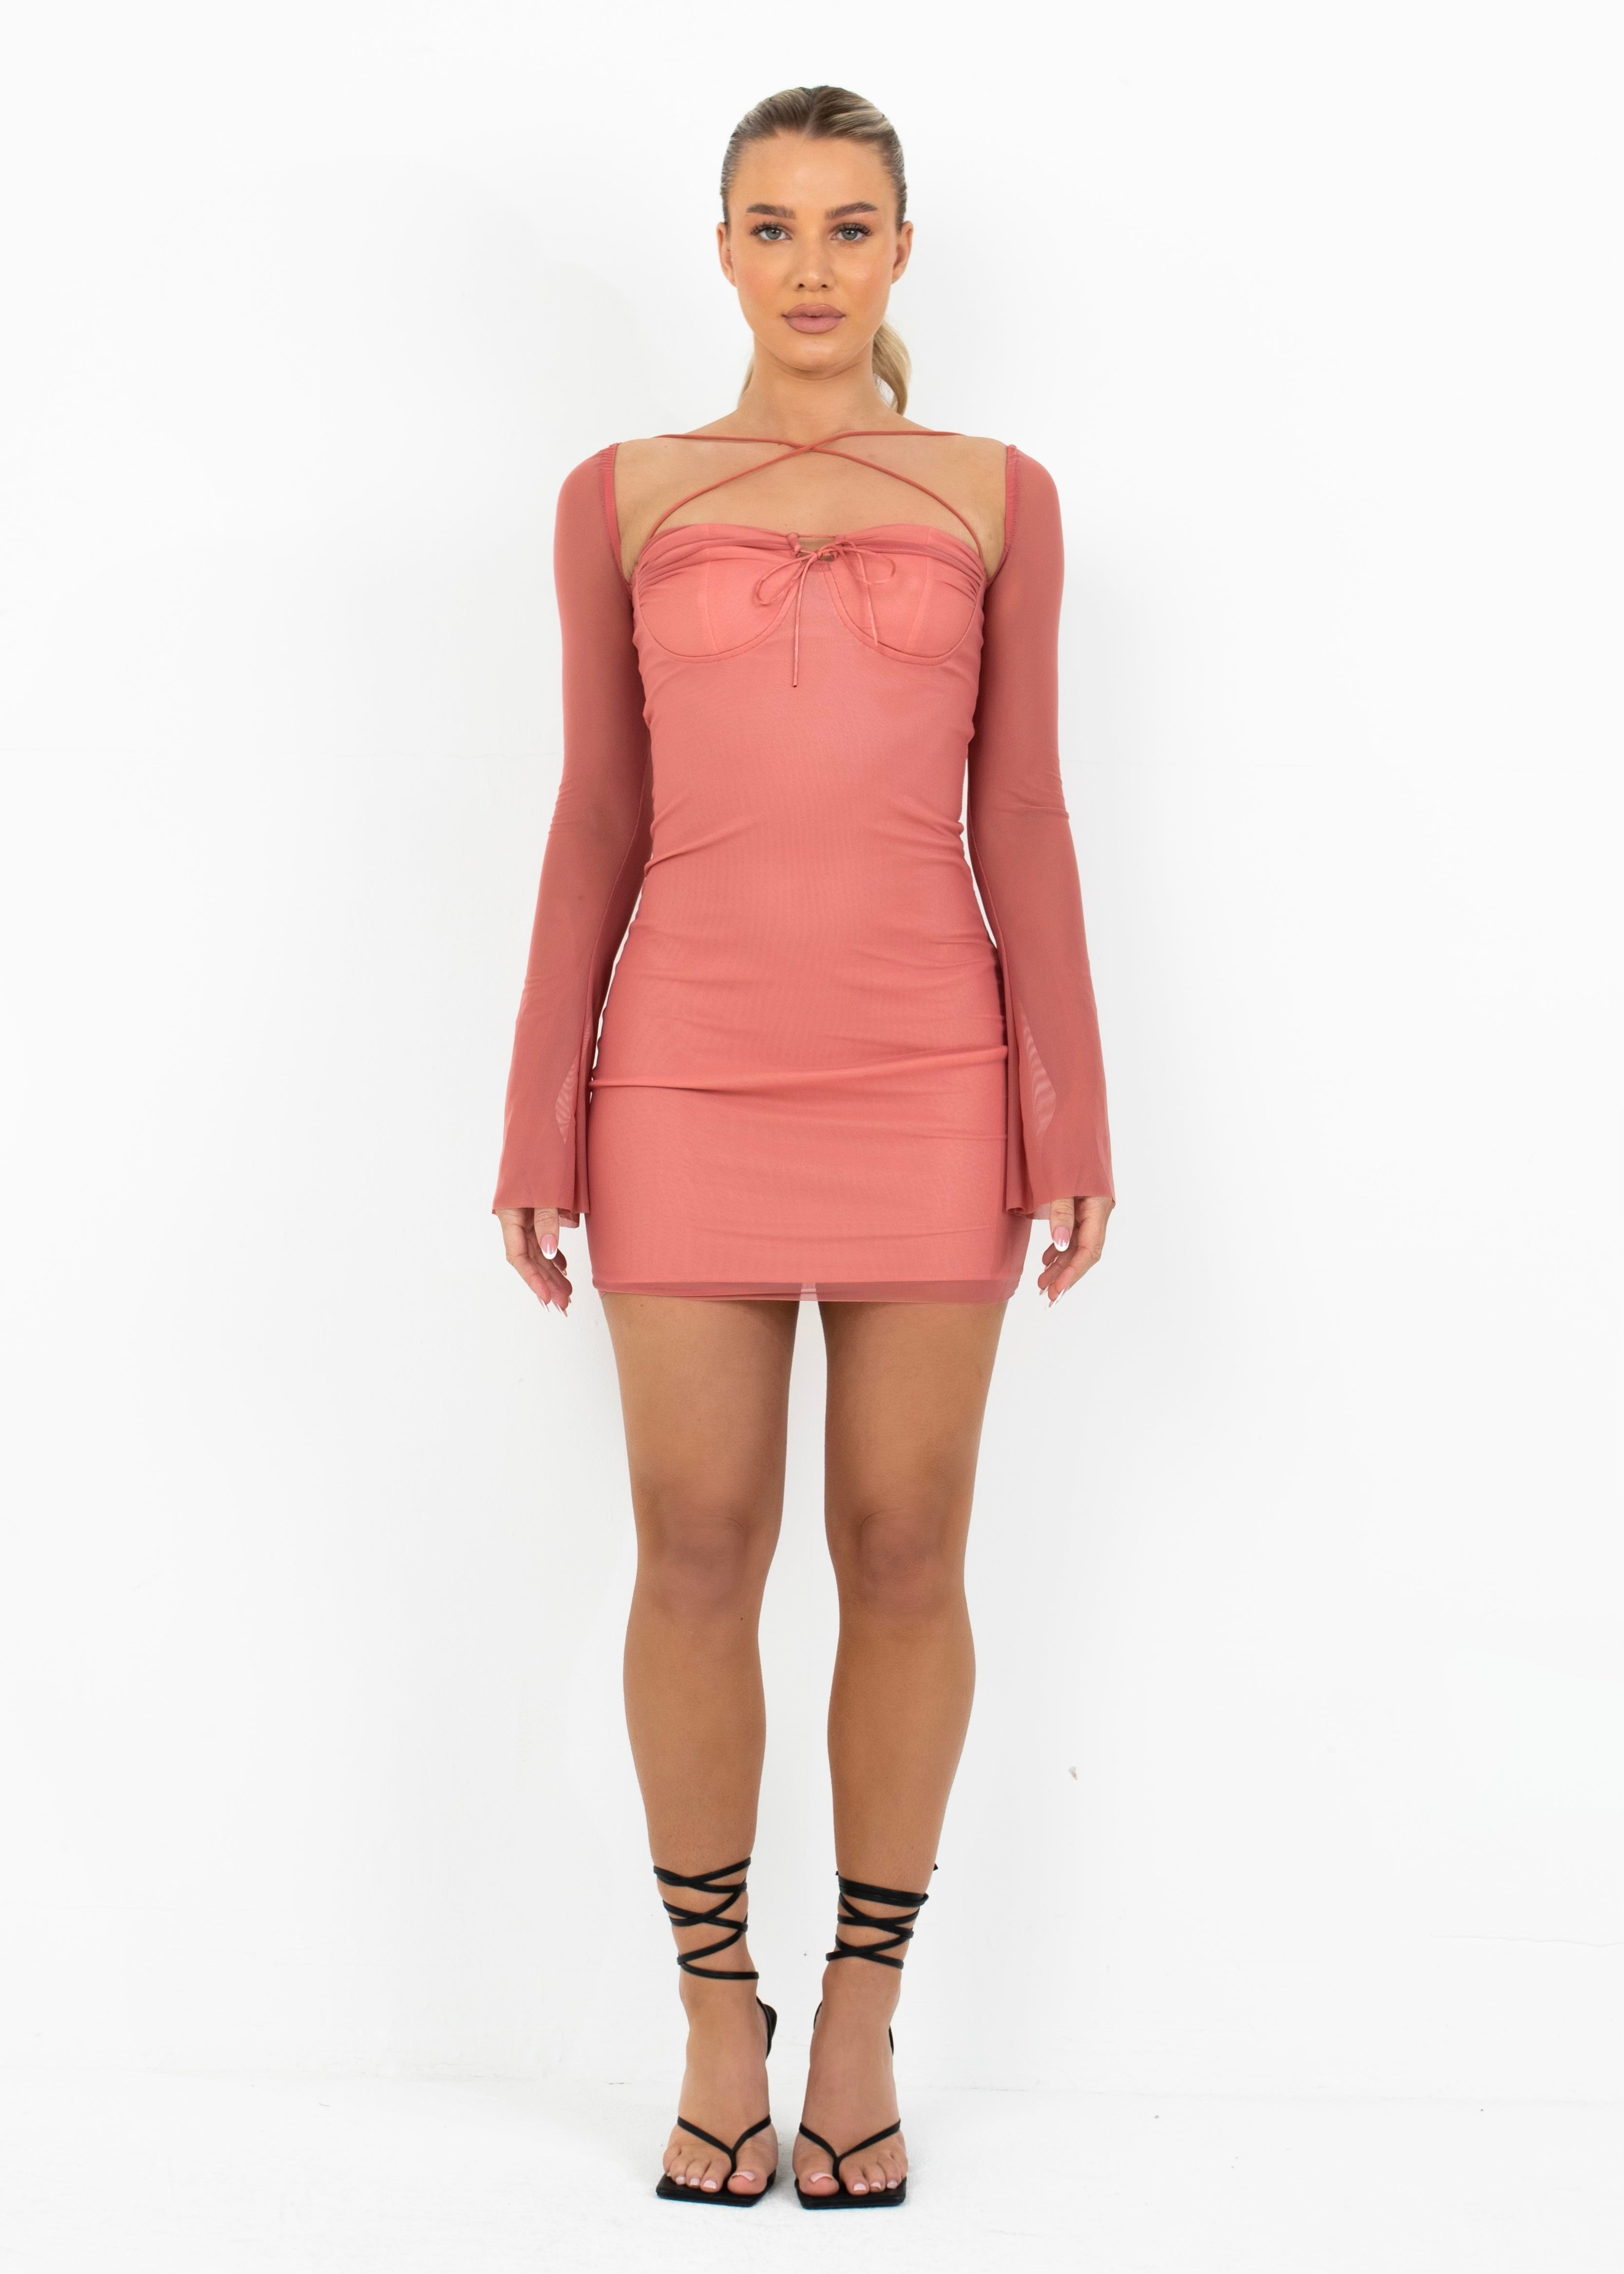 CATERINA - Pink Bodycon Mini Dress - SALE